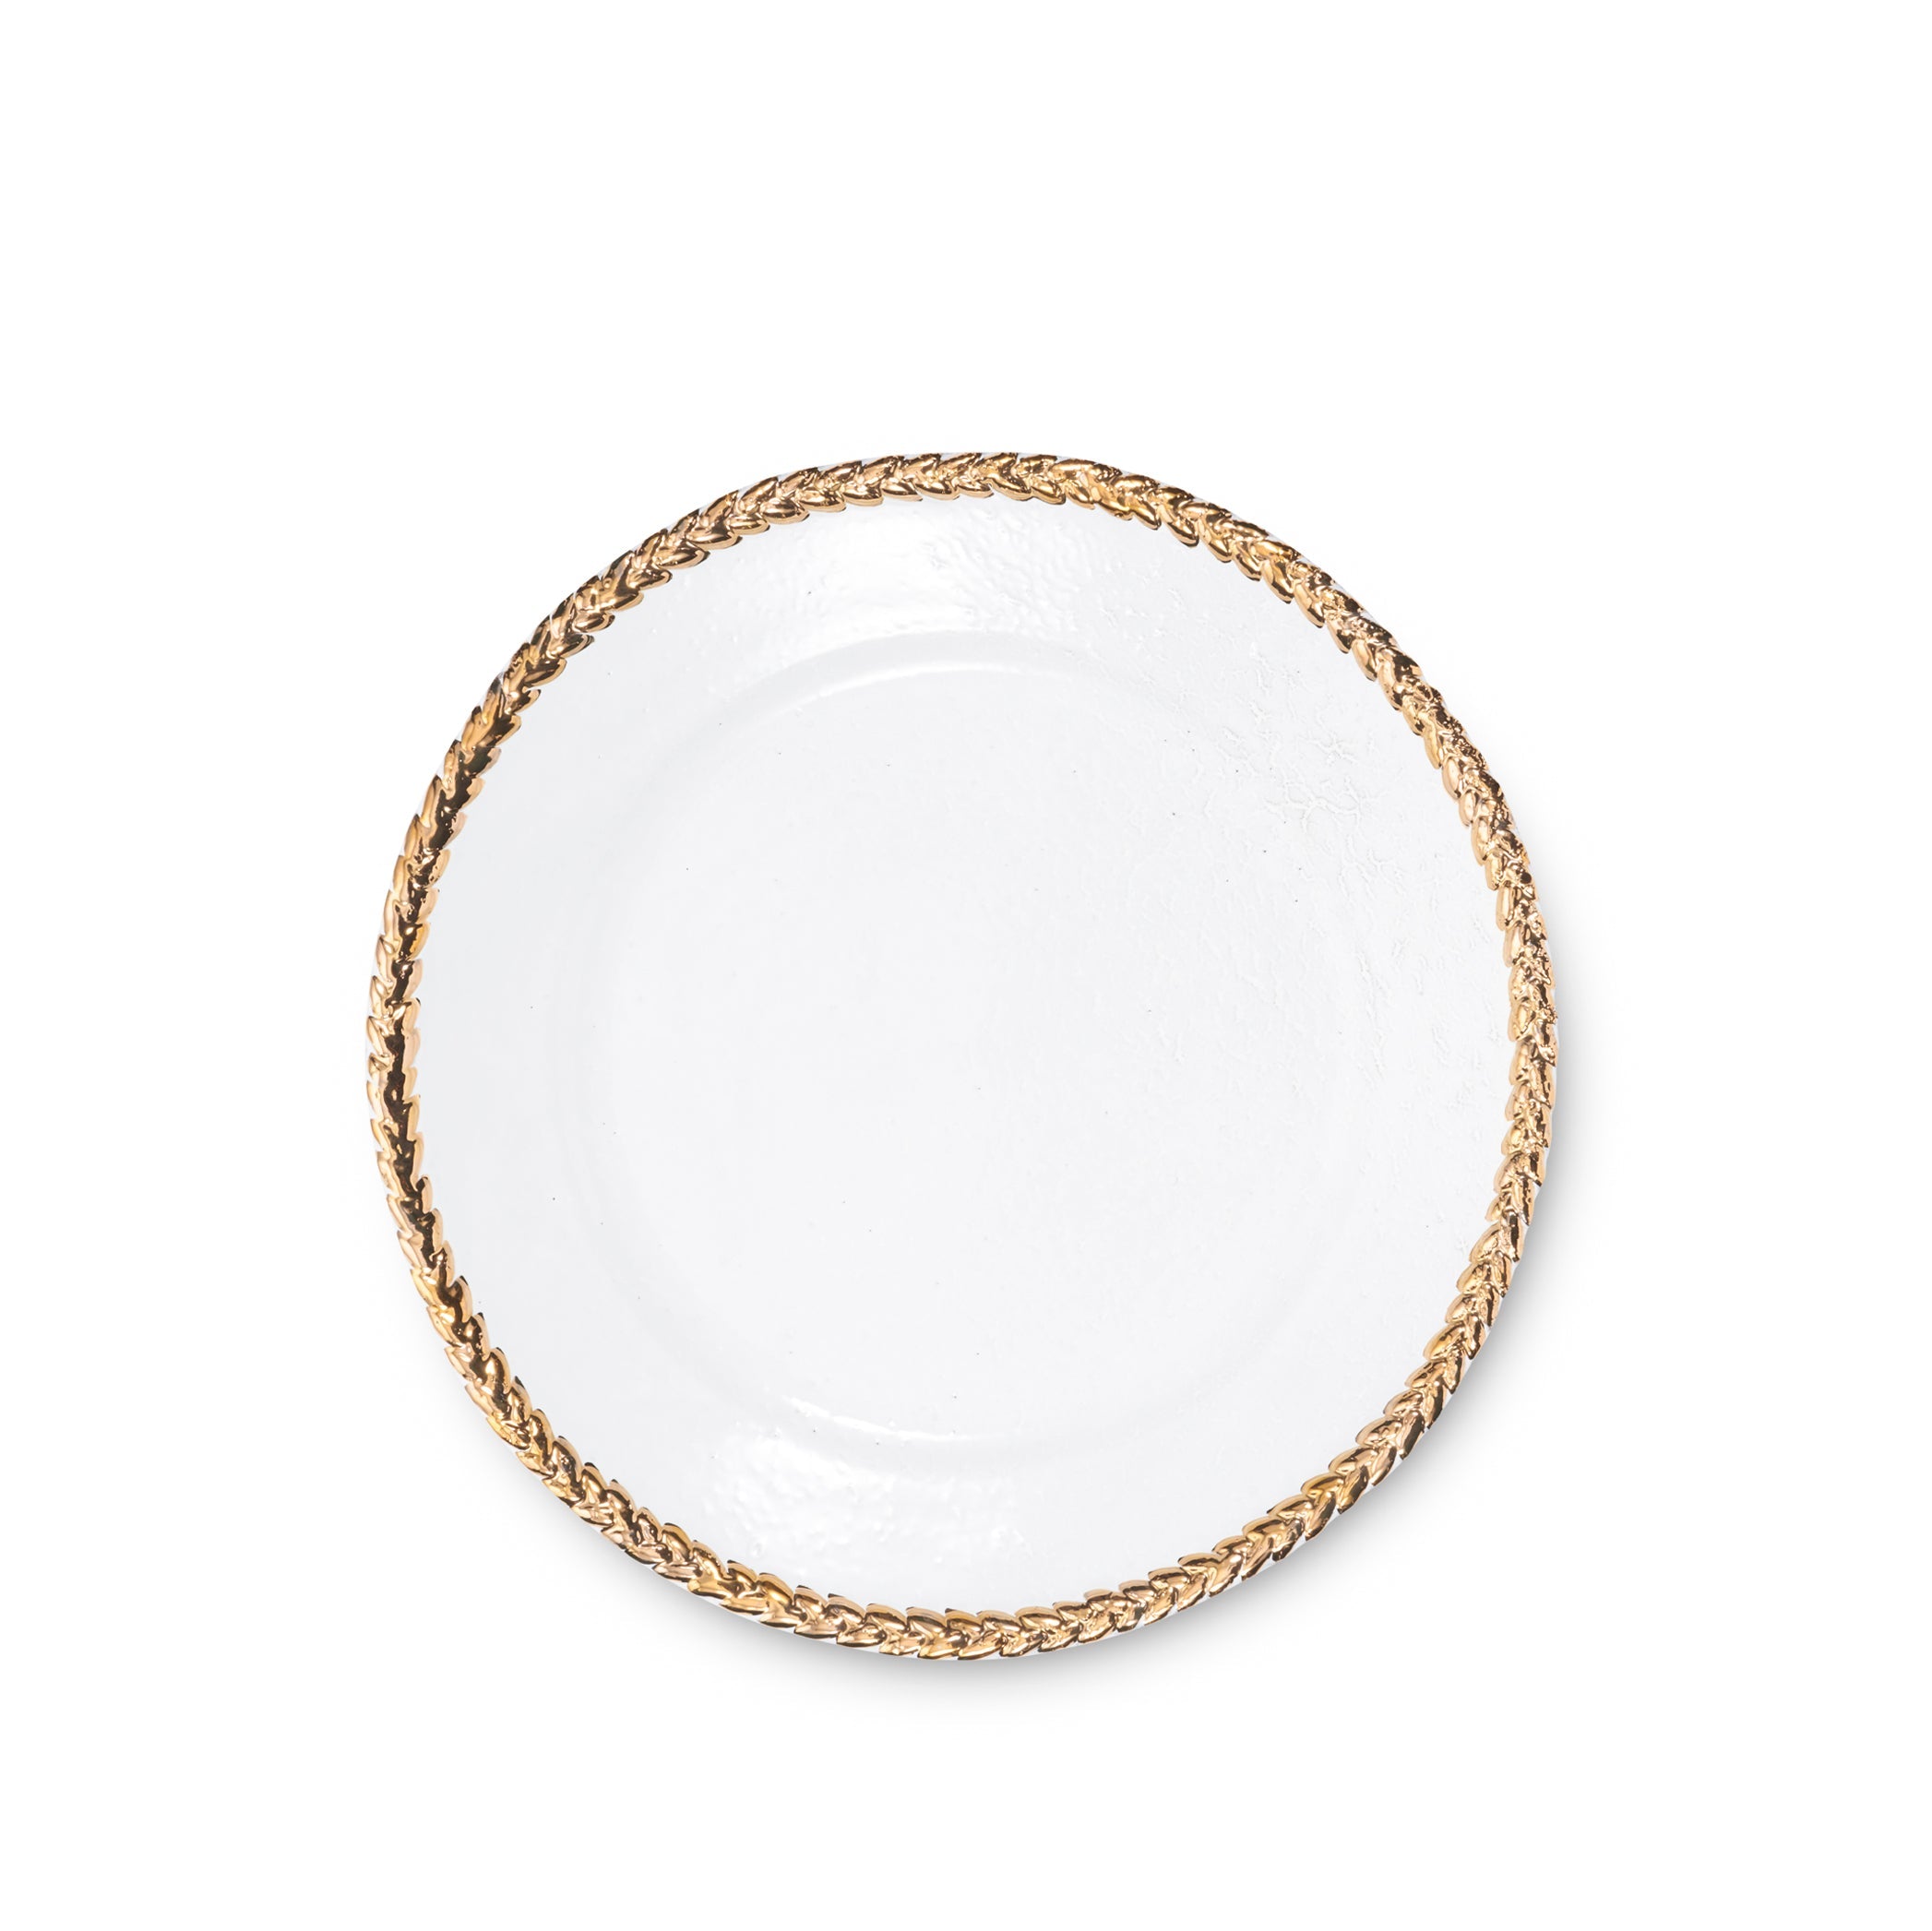 Joséphine Dinner Plate with Gold Rim by Astier de Villatte, 26.5cm